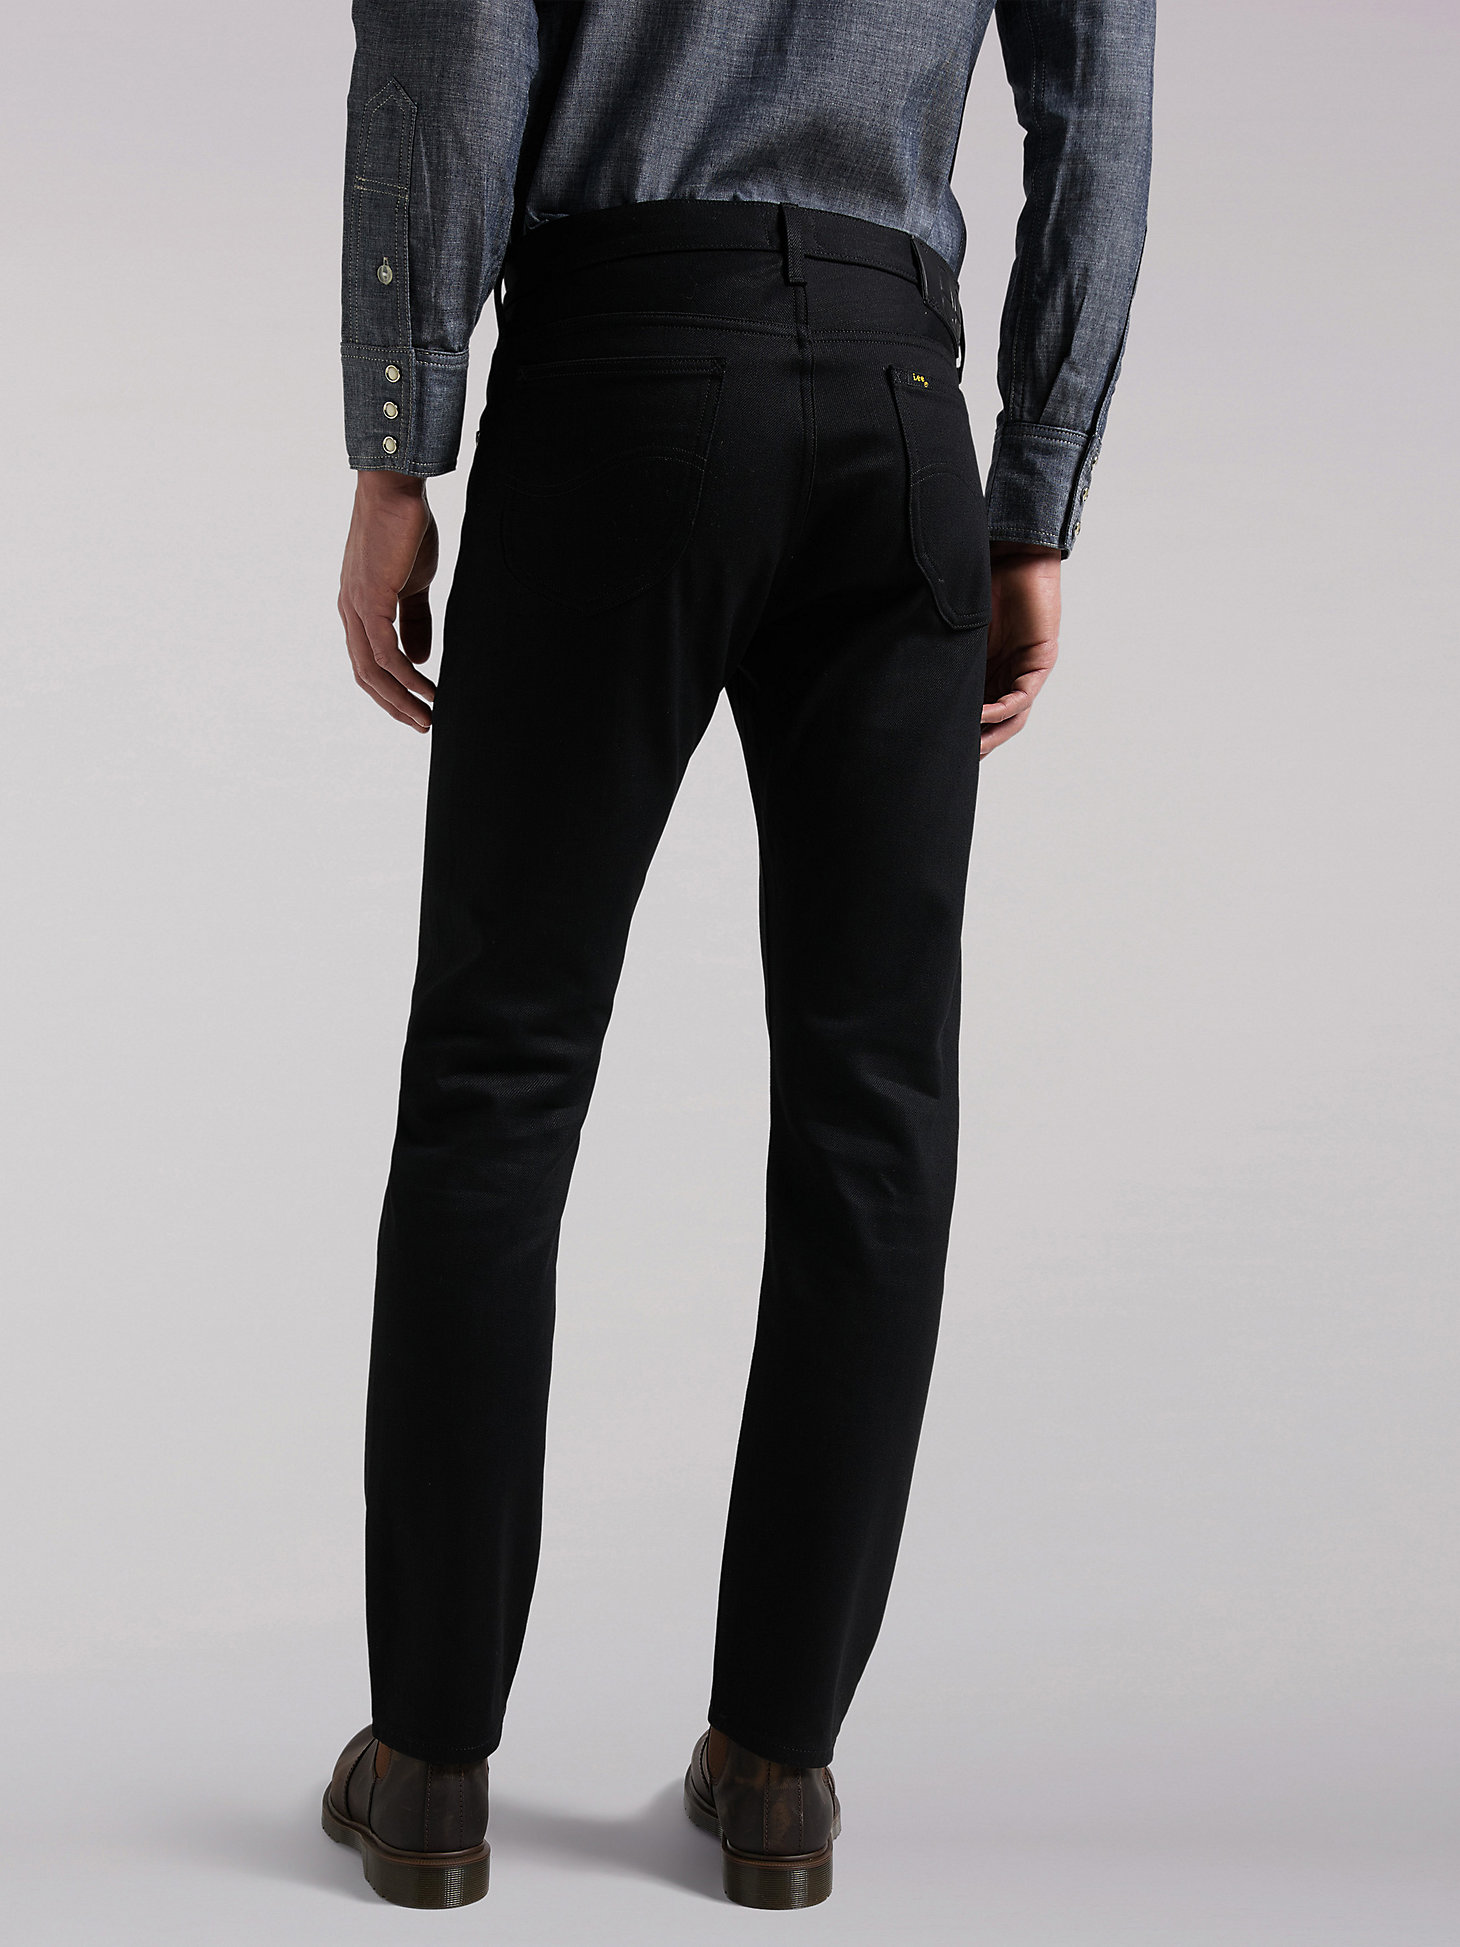 Men's Lee 101 Rider Slim Fit Jean in Dry Black alternative view 1